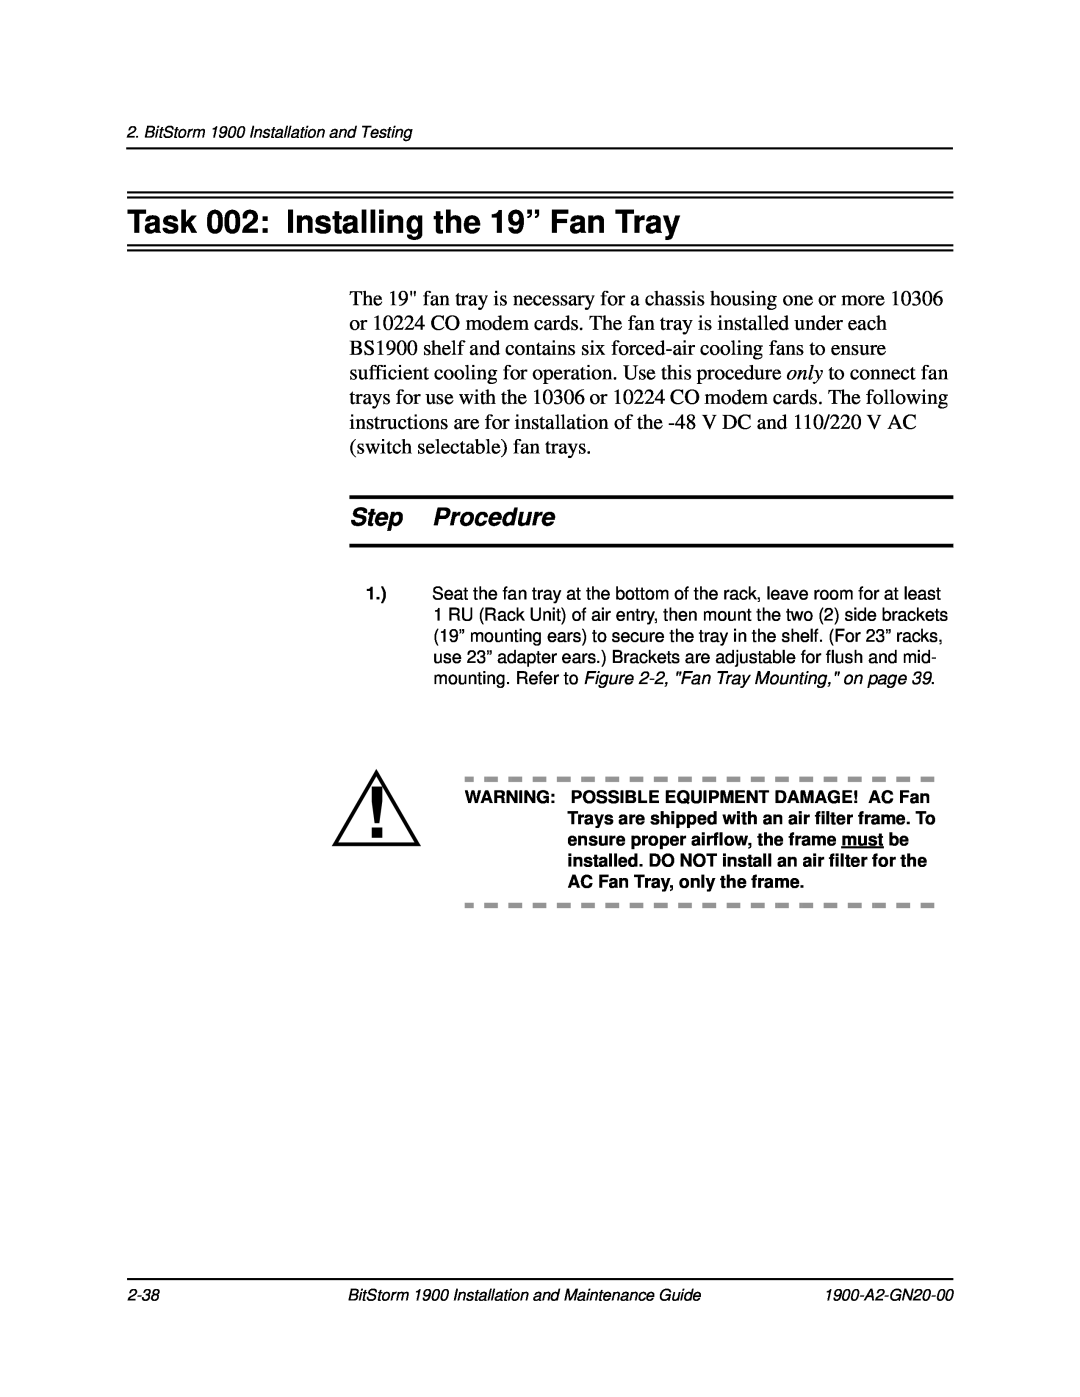 Paradyne 1900 manual Task 002 Installing the 19” Fan Tray, Step Procedure 